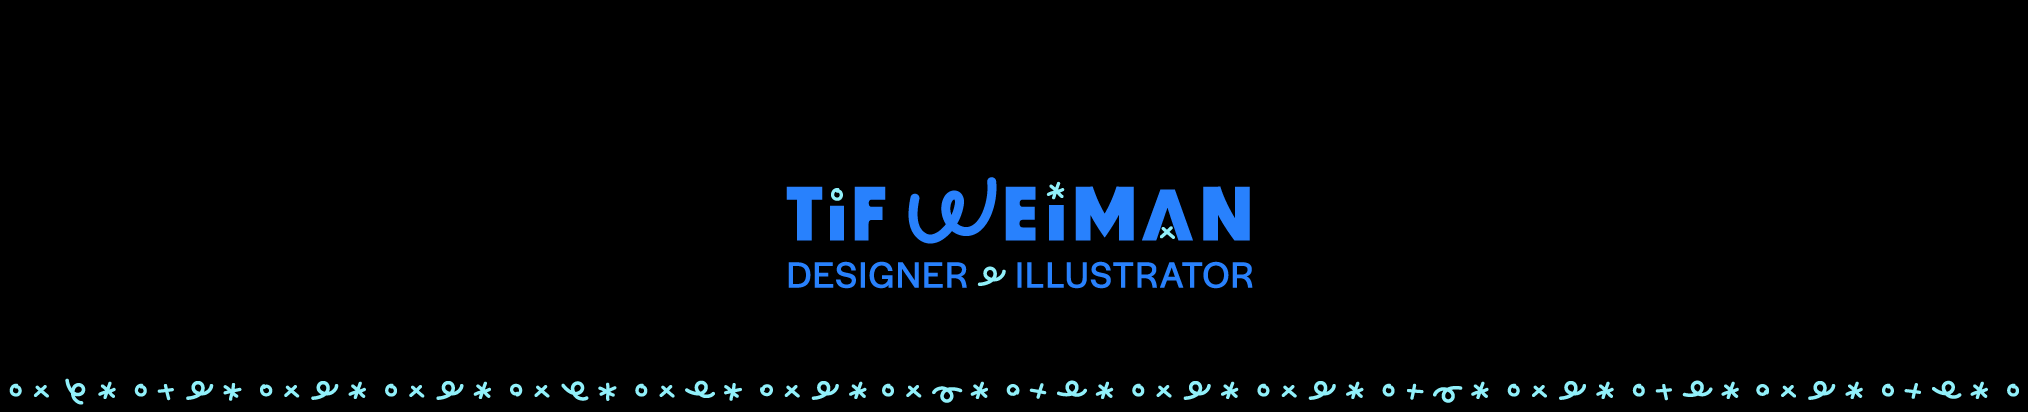 Tif Weiman profil başlığı